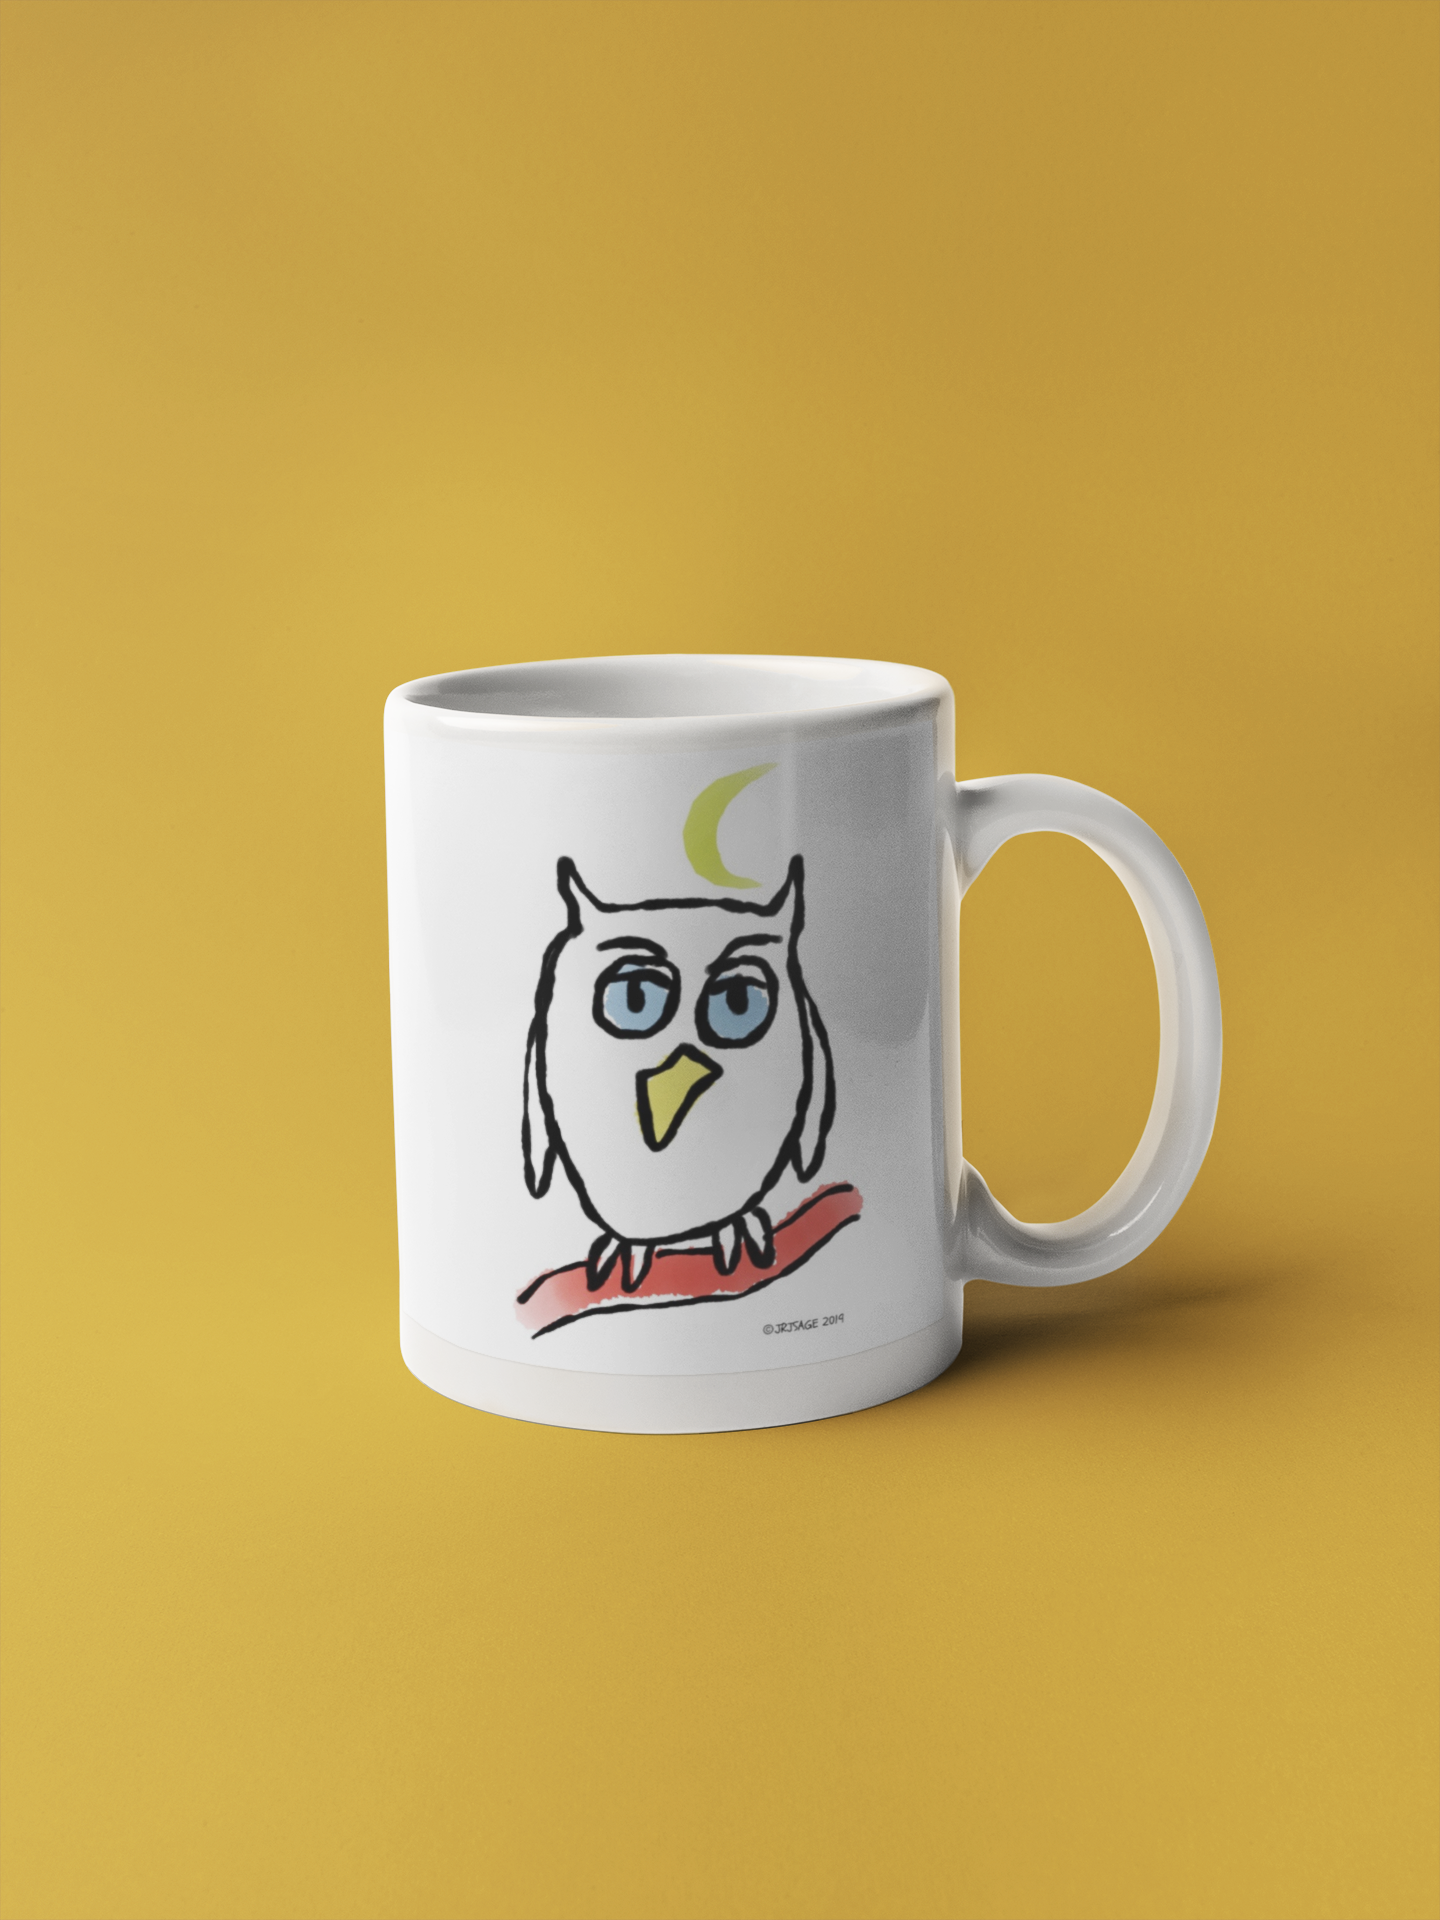 Night Owl Mug - Illustrated cute owl design by Hector and Bone